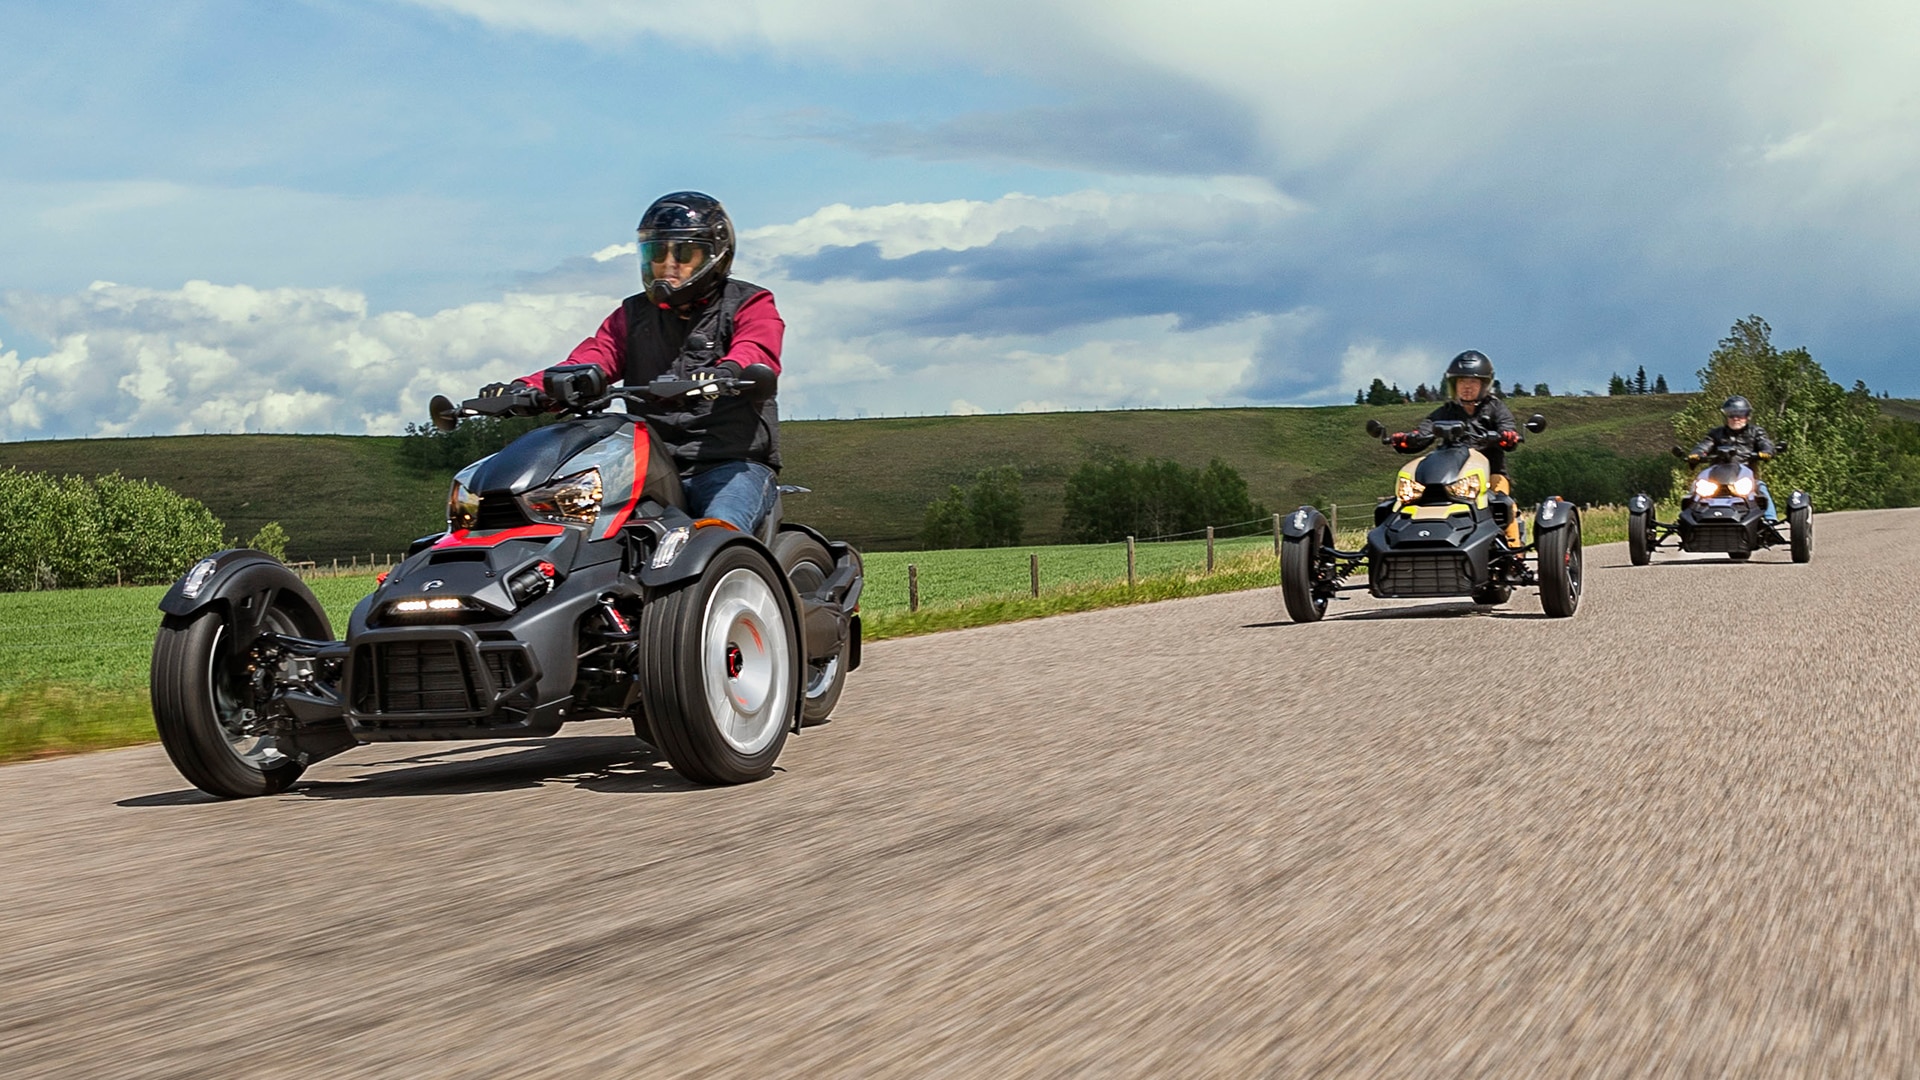 Three riders on Can-Am 3-wheel vehicles